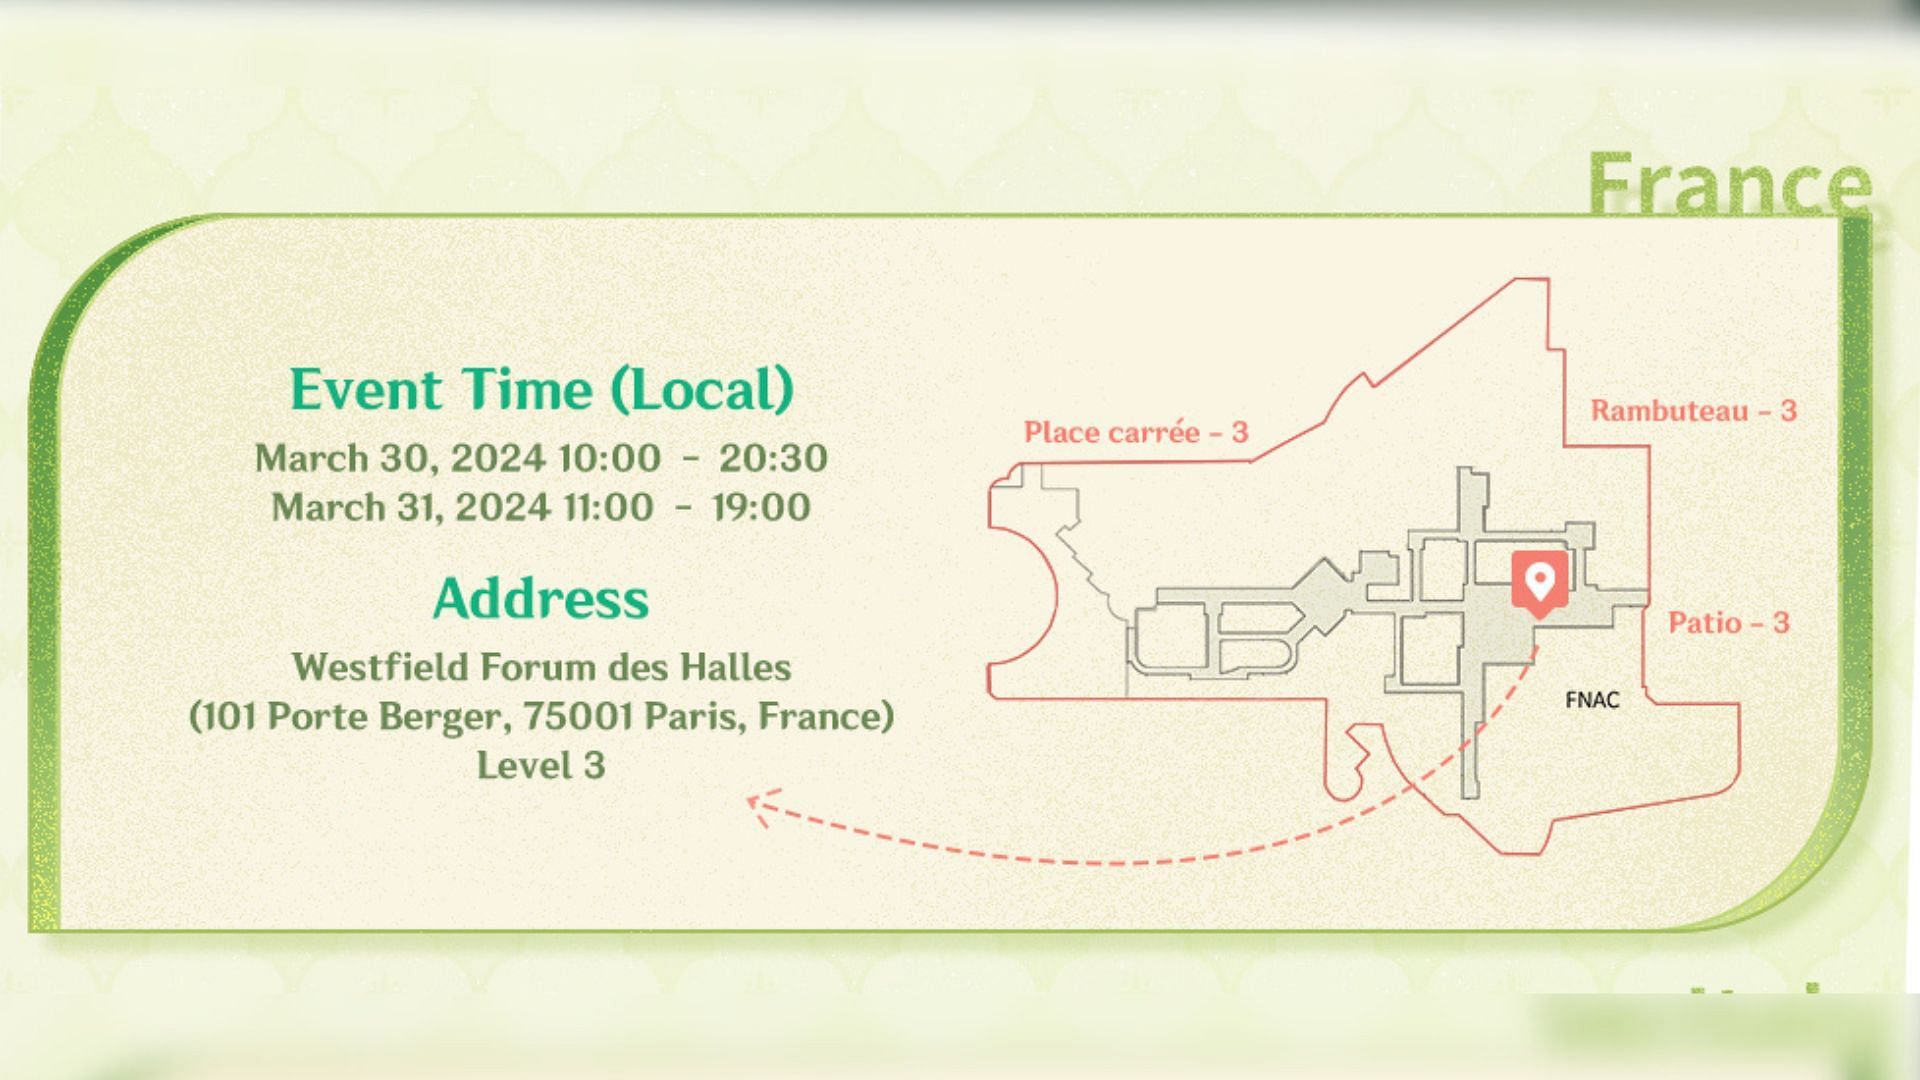 France event time and address (Image via HoYoverse)